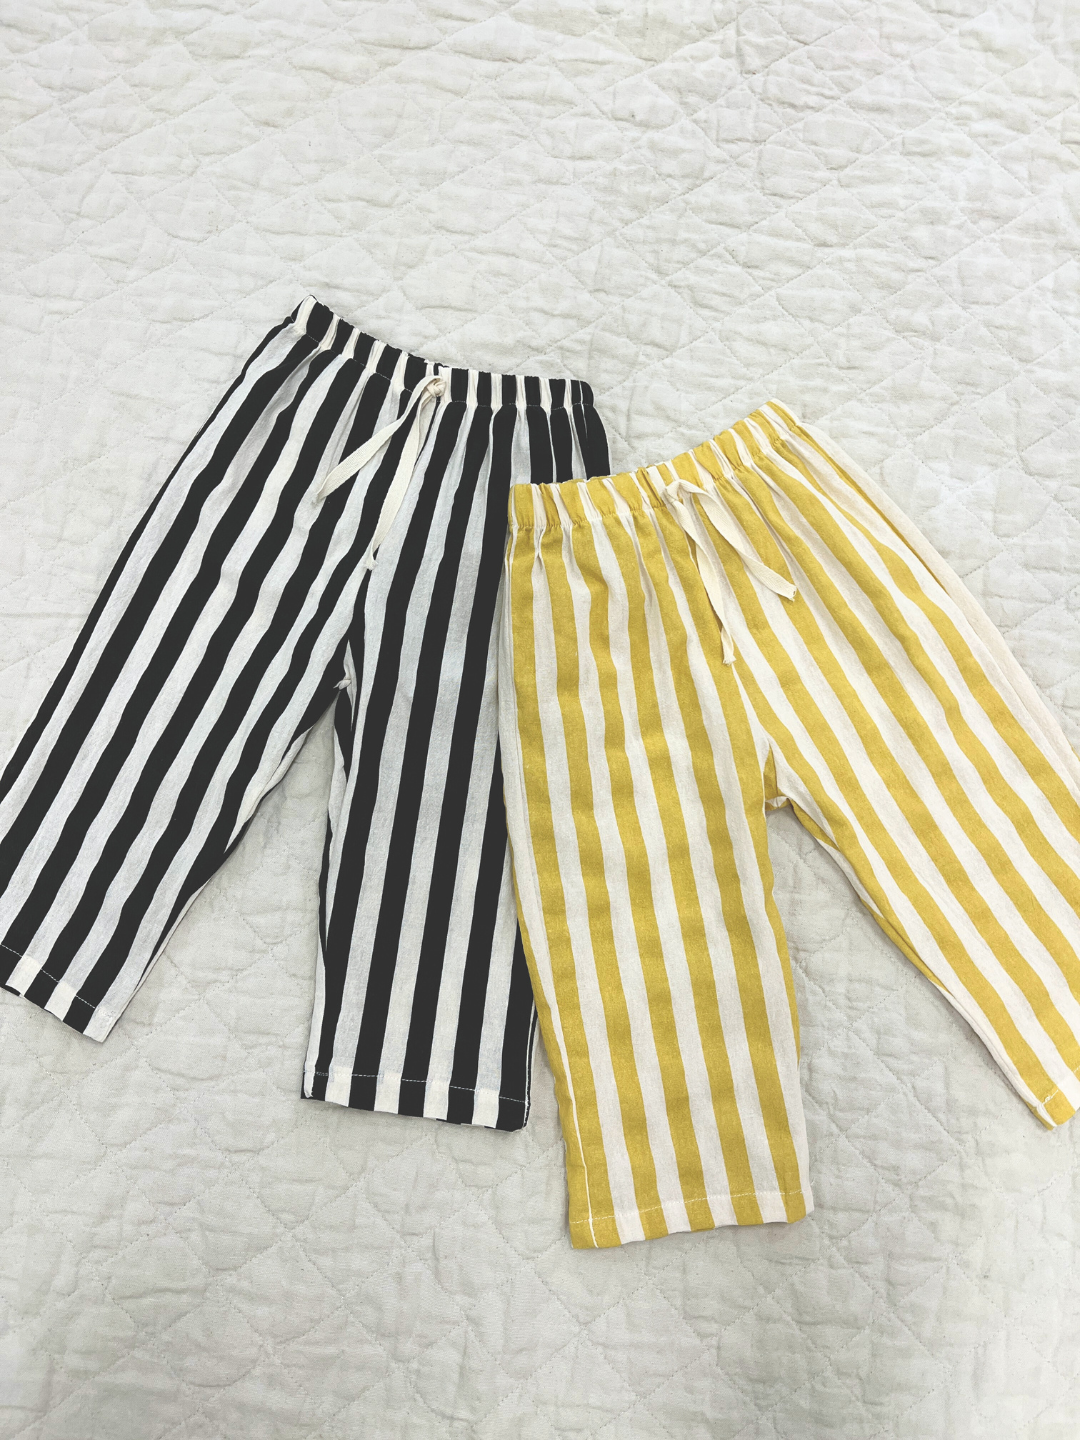 Black & yellow striped pants on a blanket 